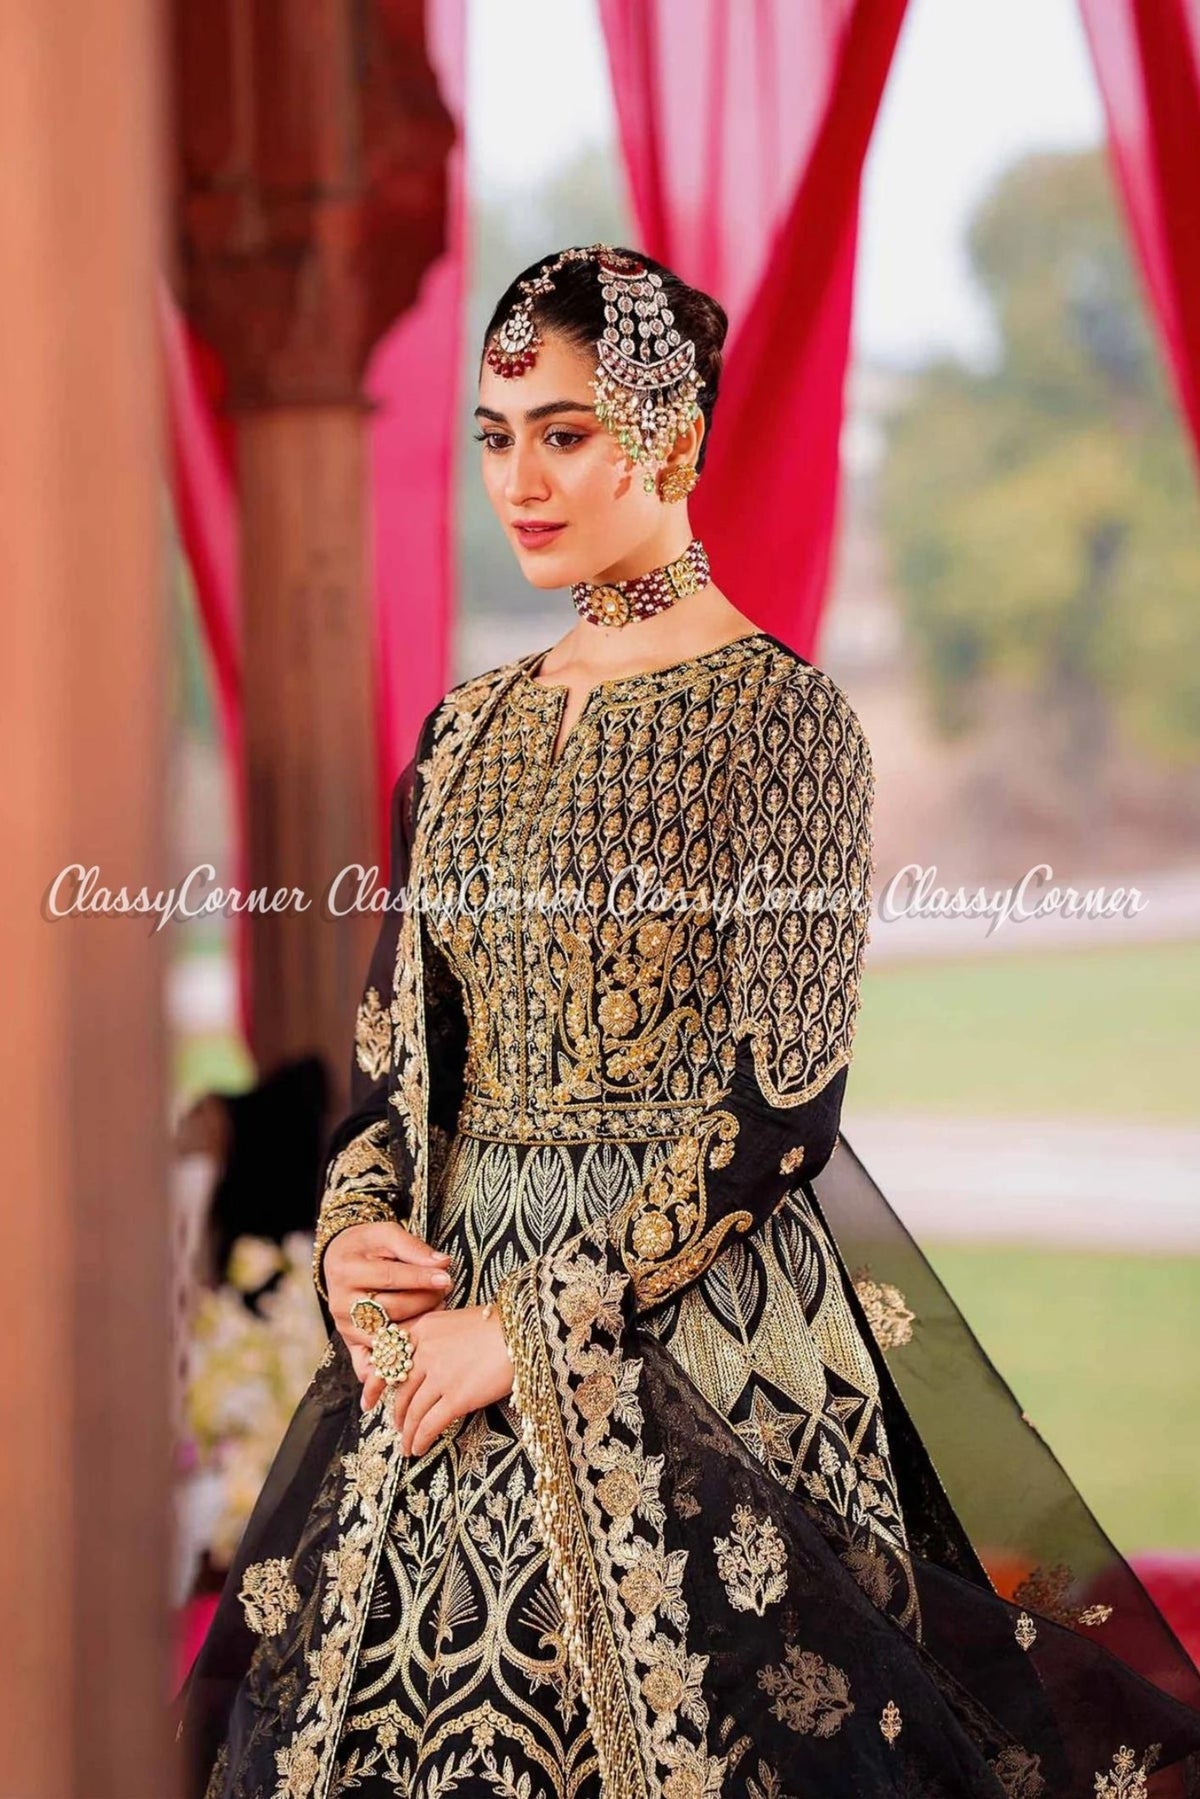 Pakistani wedding dresses online